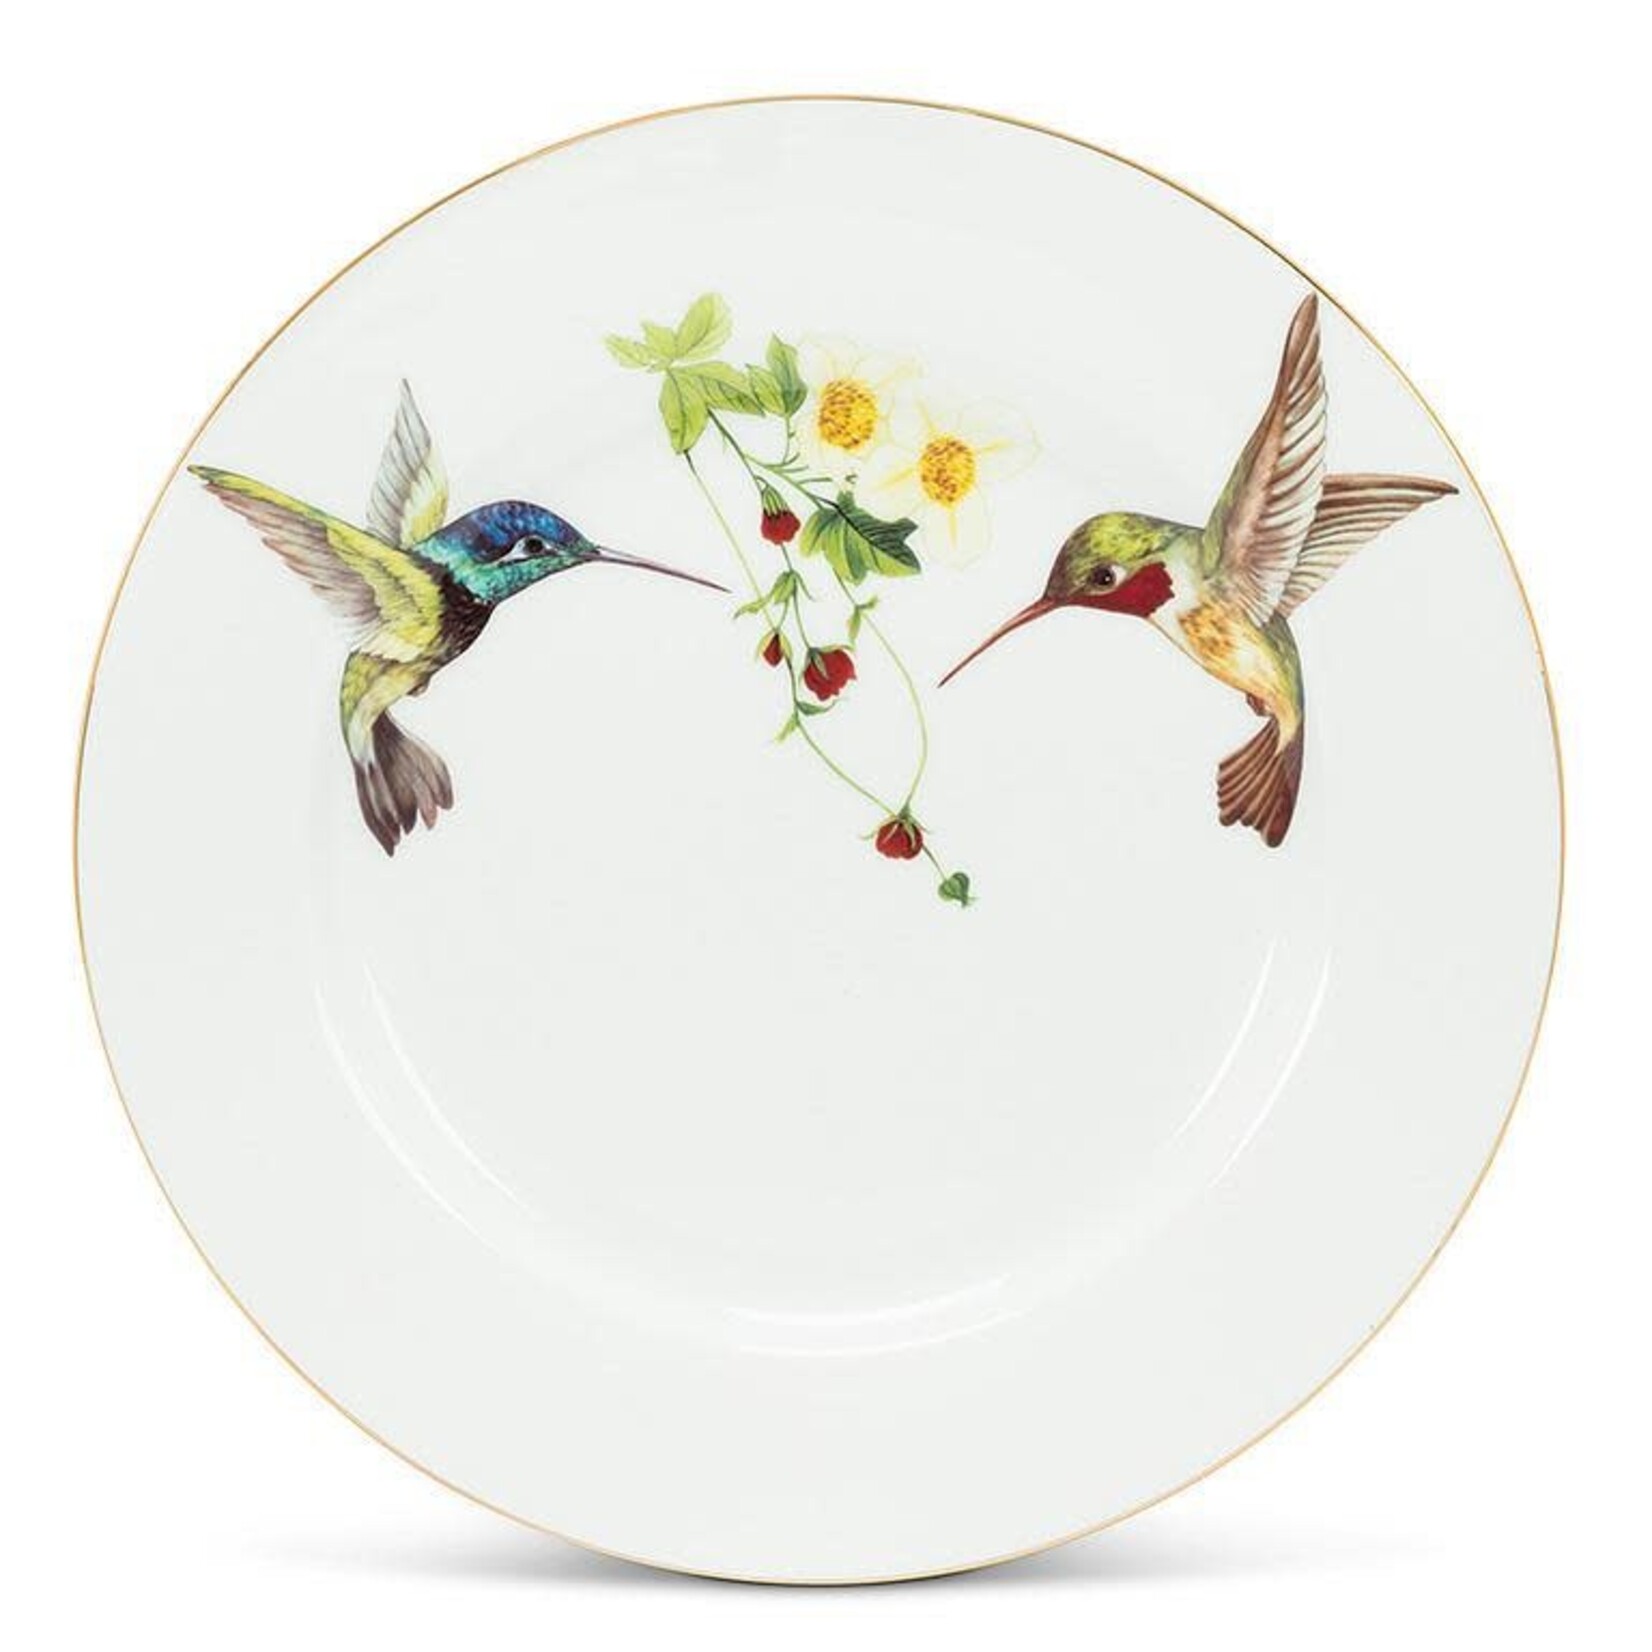 ABBOTT ABBOTT  Plate 8"- Hummingbird